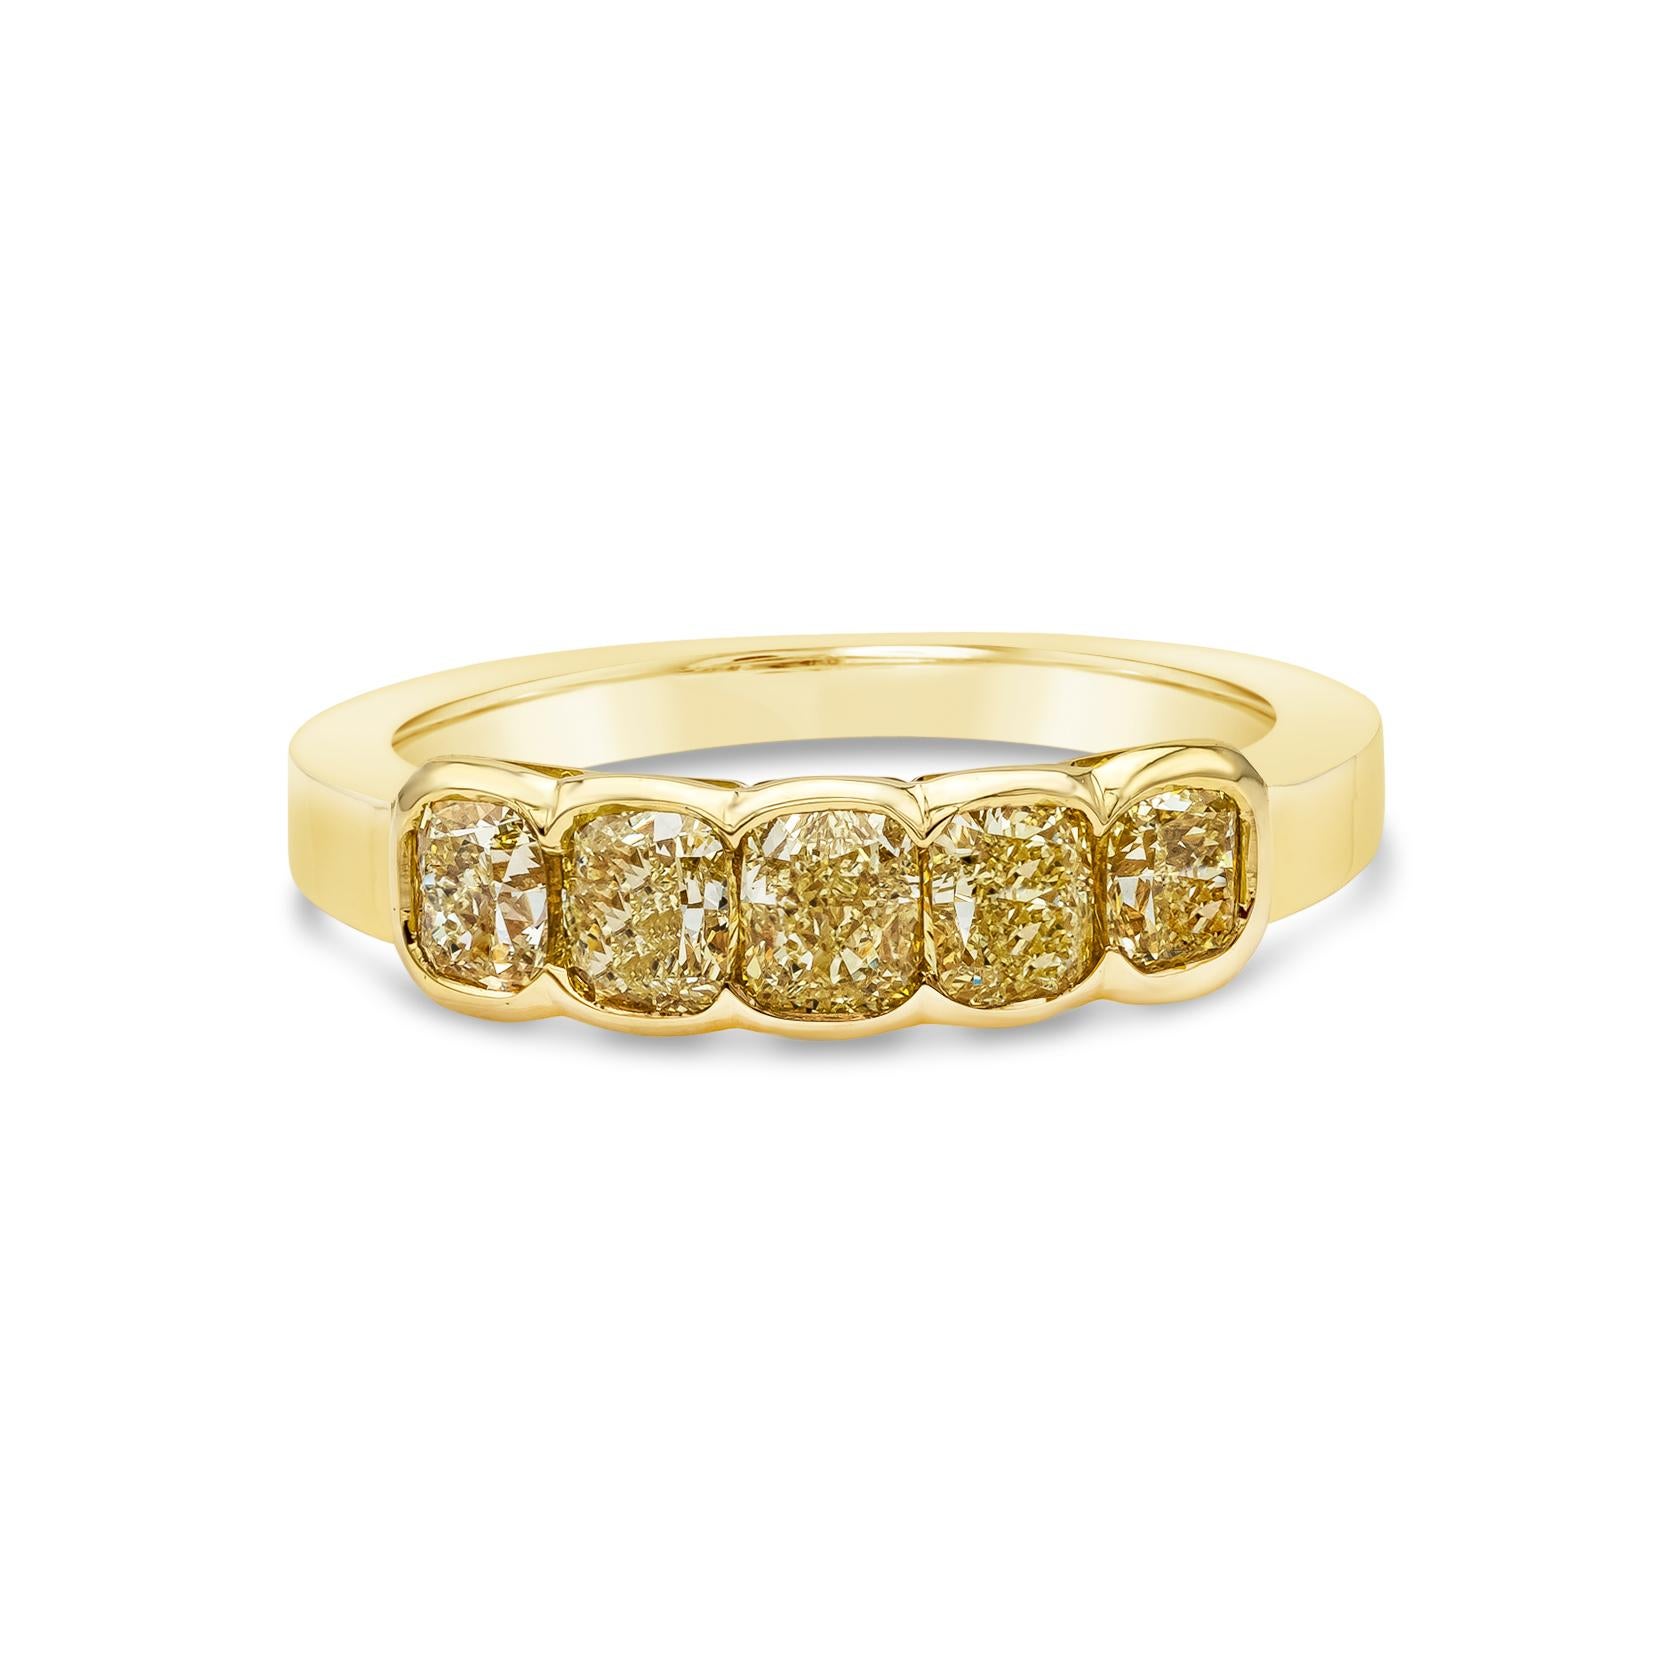 Contemporary Roman Malakov 1.69 Carat Intense Yellow Diamond Five-Stone Wedding Band